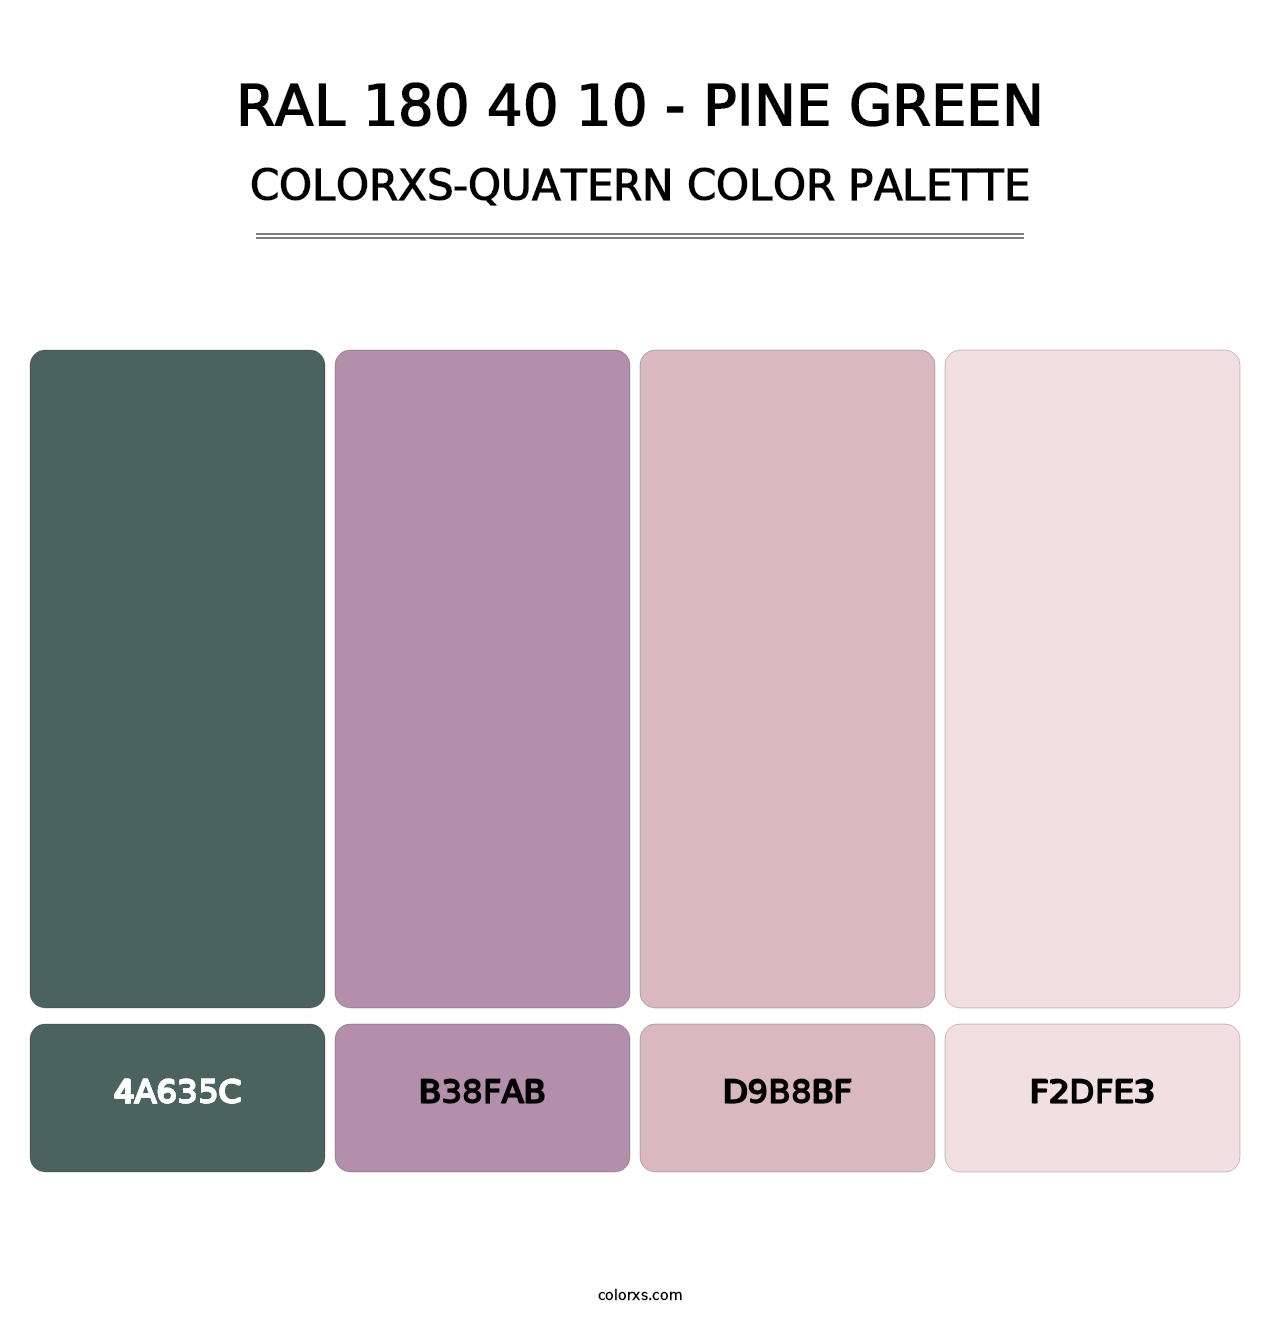 RAL 180 40 10 - Pine Green - Colorxs Quatern Palette